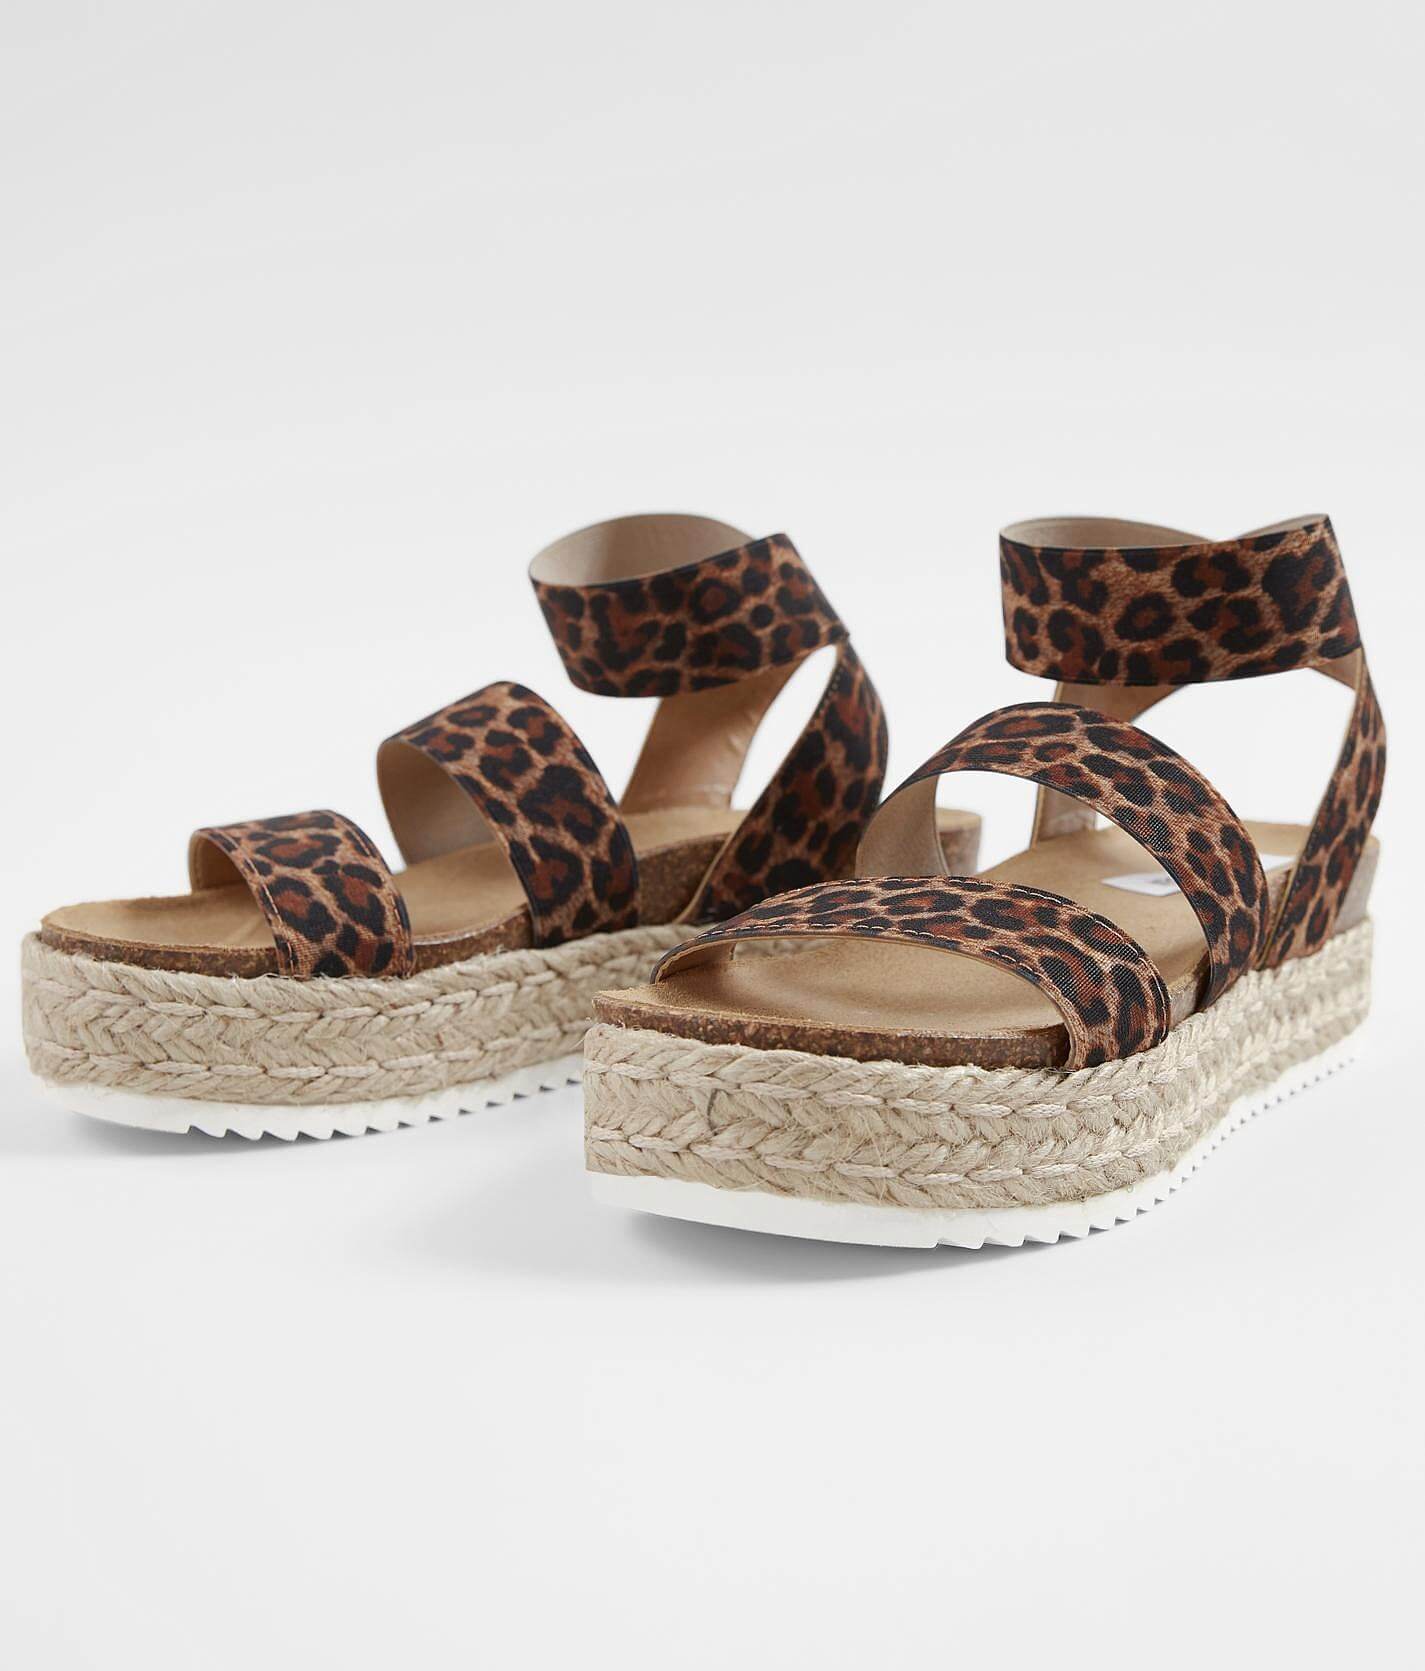 steve madden leopard sandals